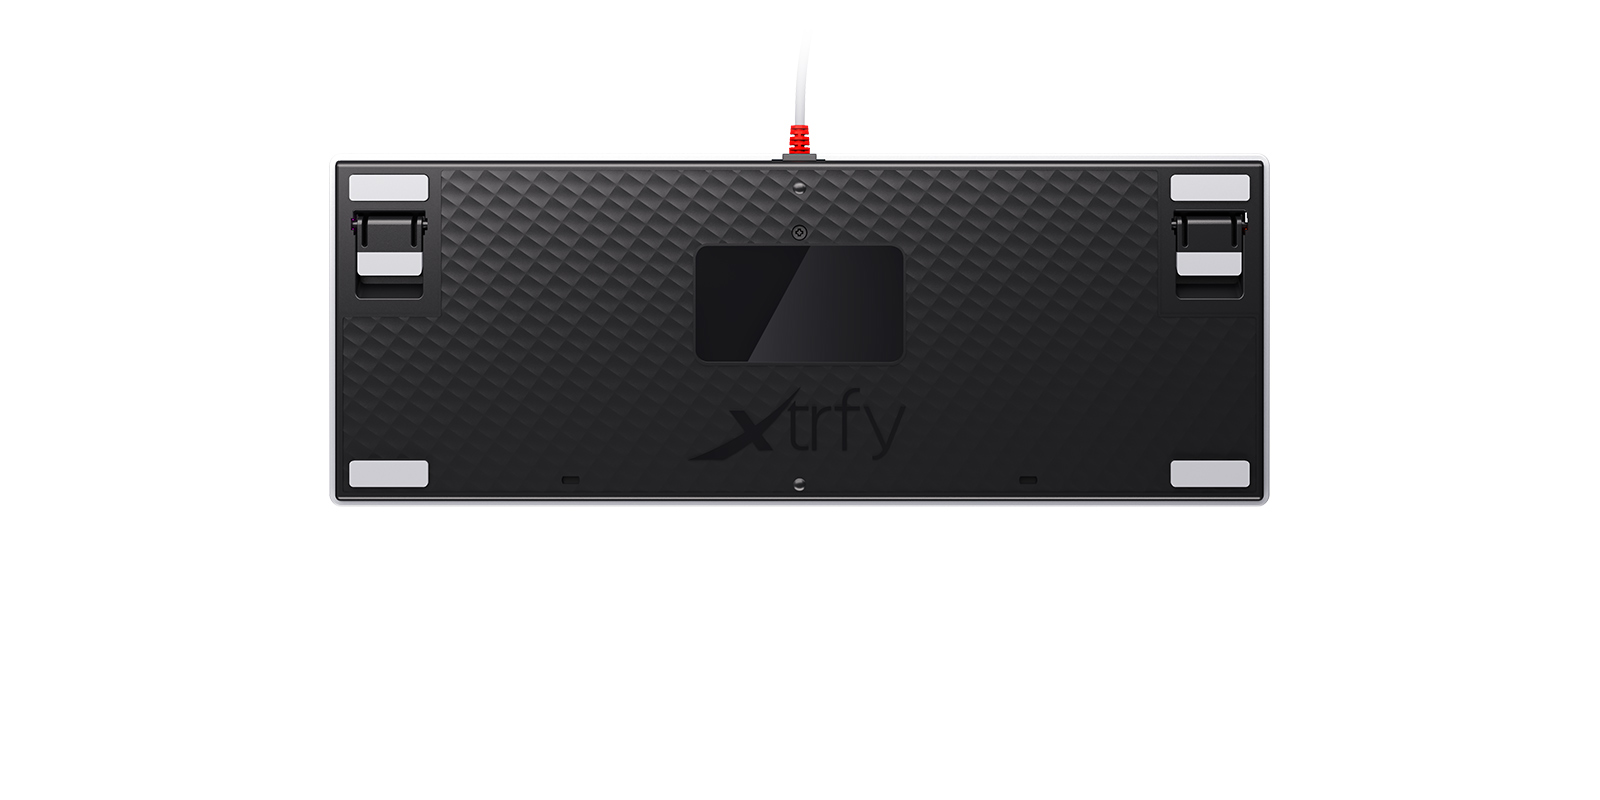 Xtrfy-K4-RGB-Retro-Gaming-Keyboard_1600x800-04.jpg